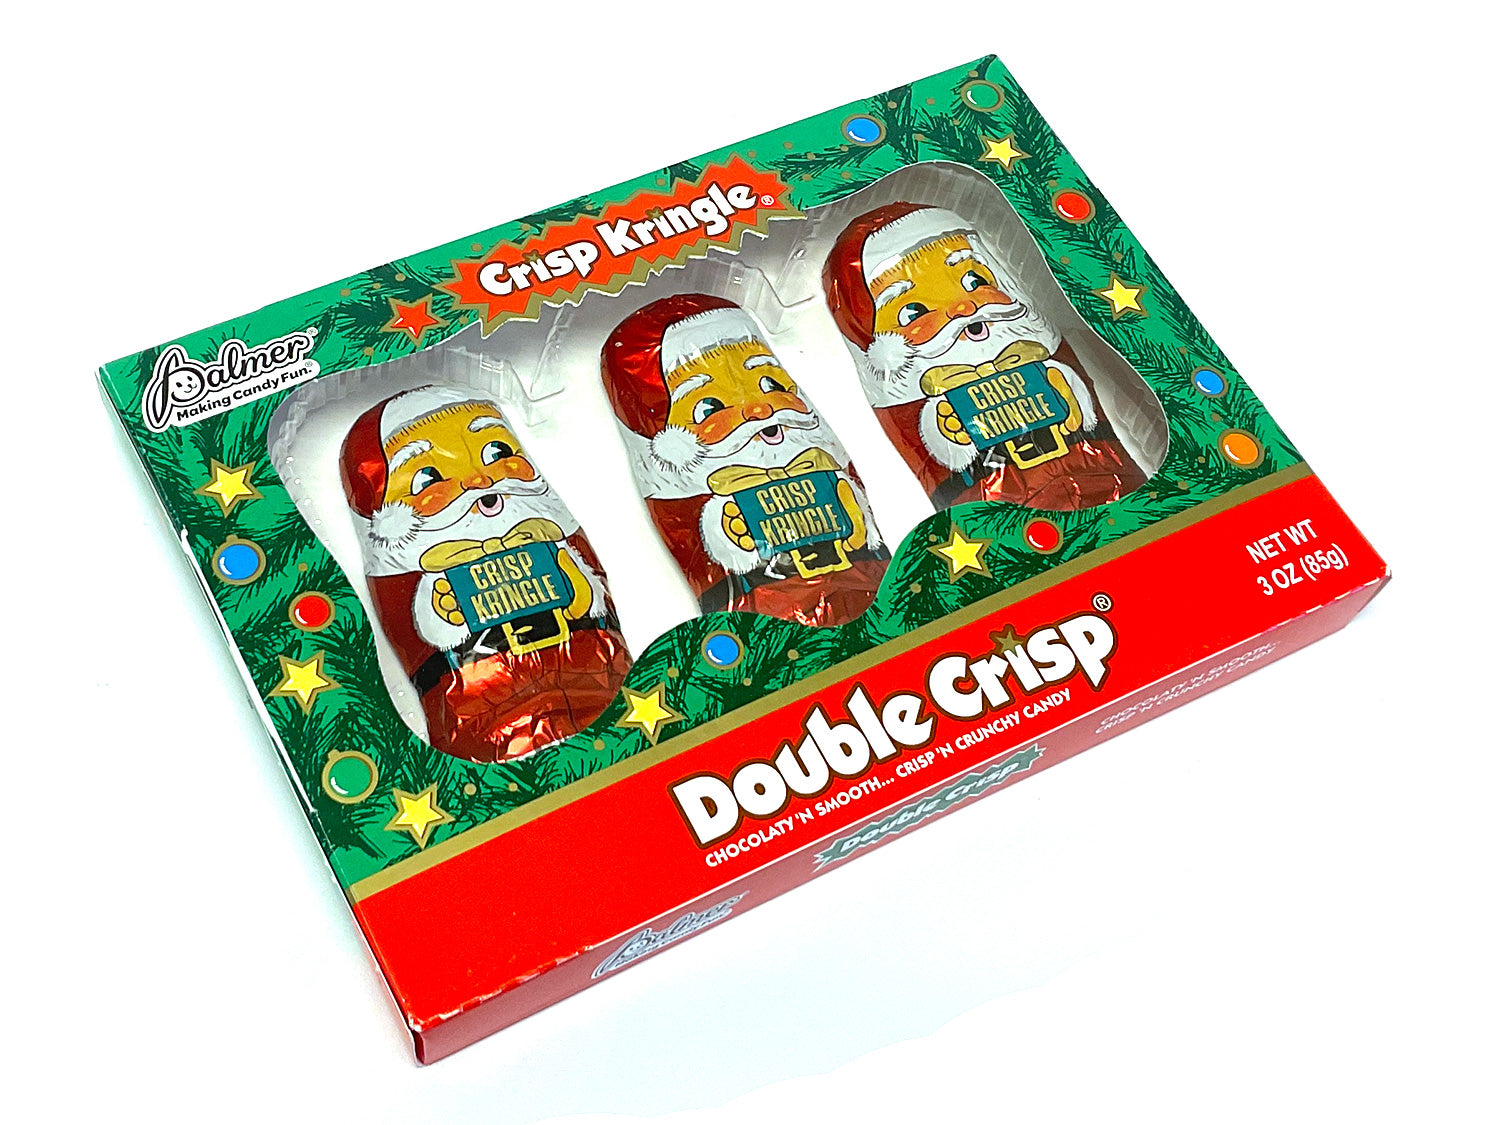 Crisp Kringle - 3 oz 3-pack